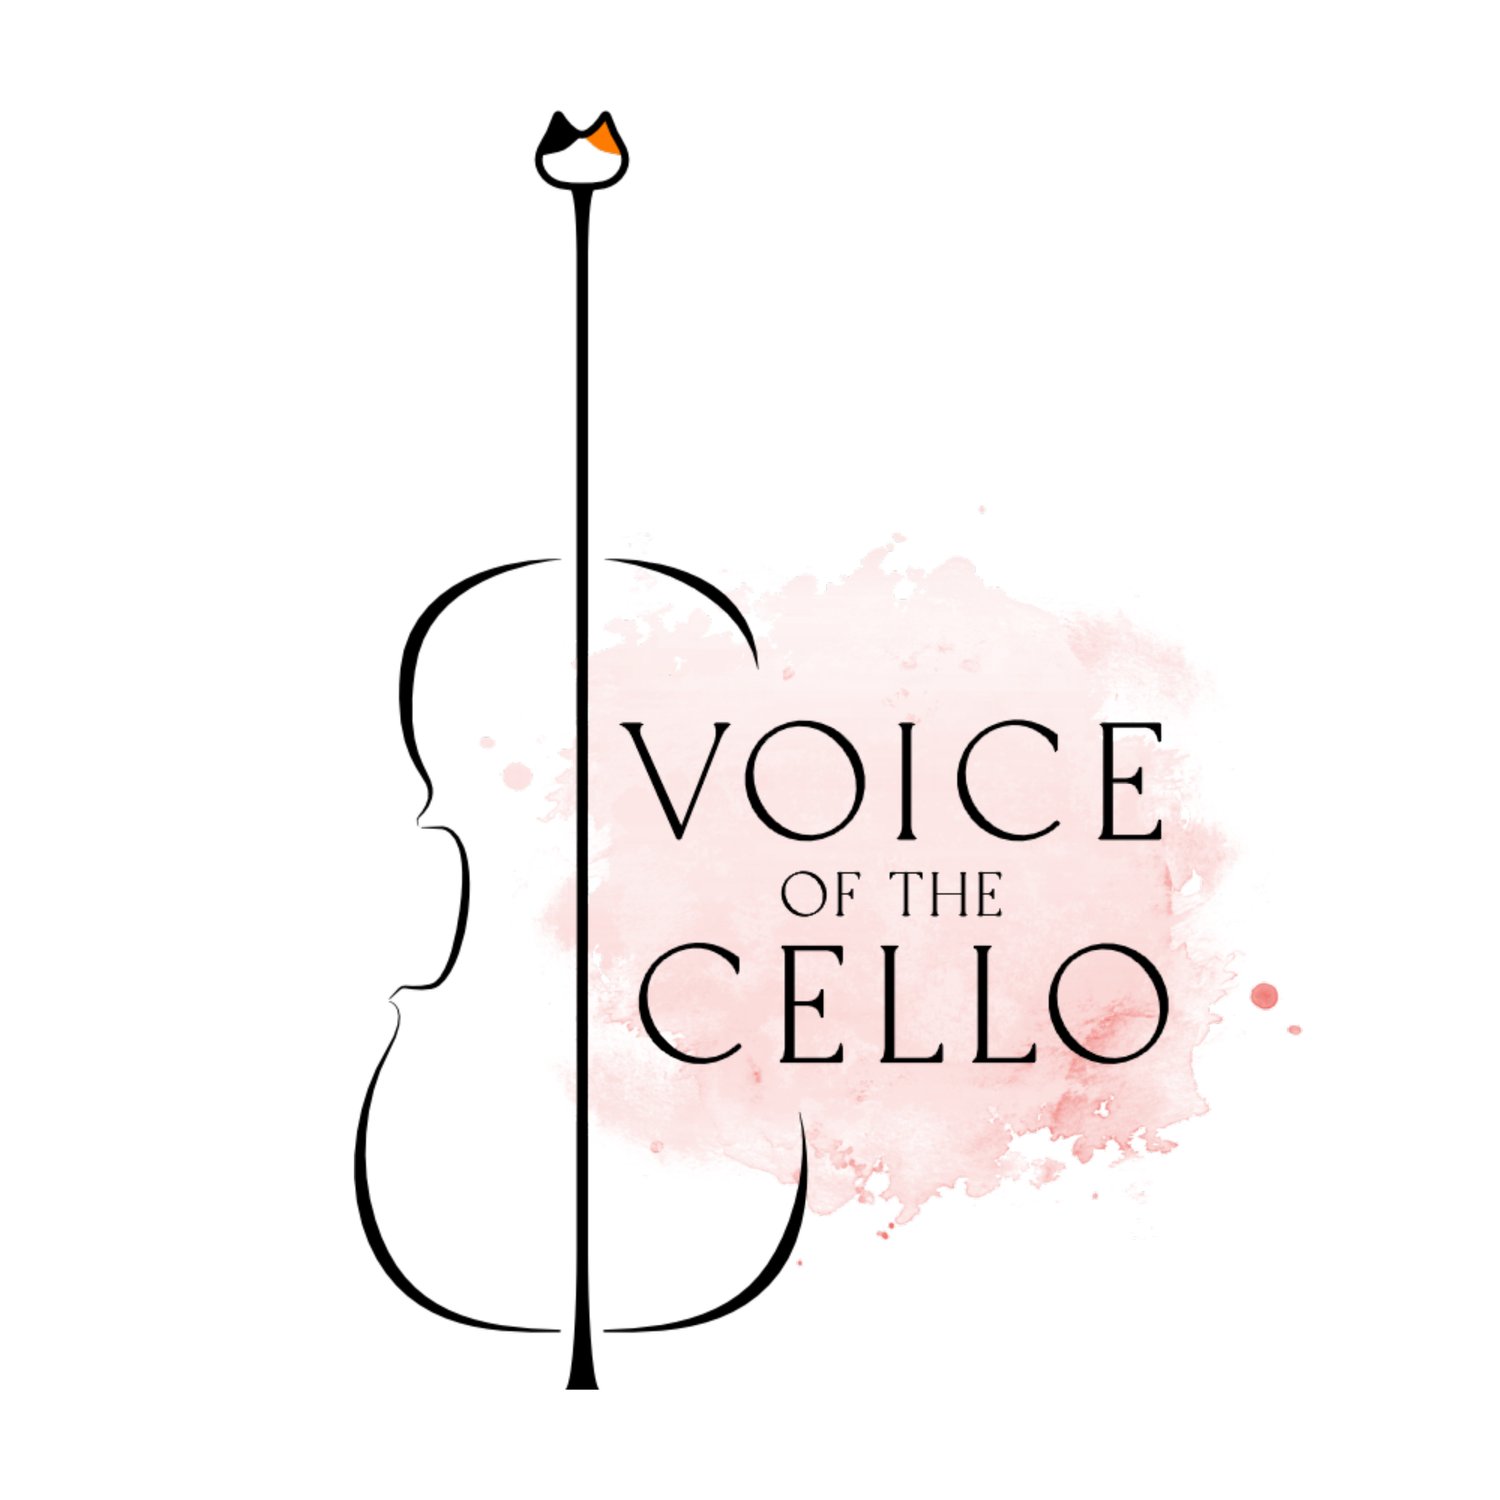 Voice of the Cello